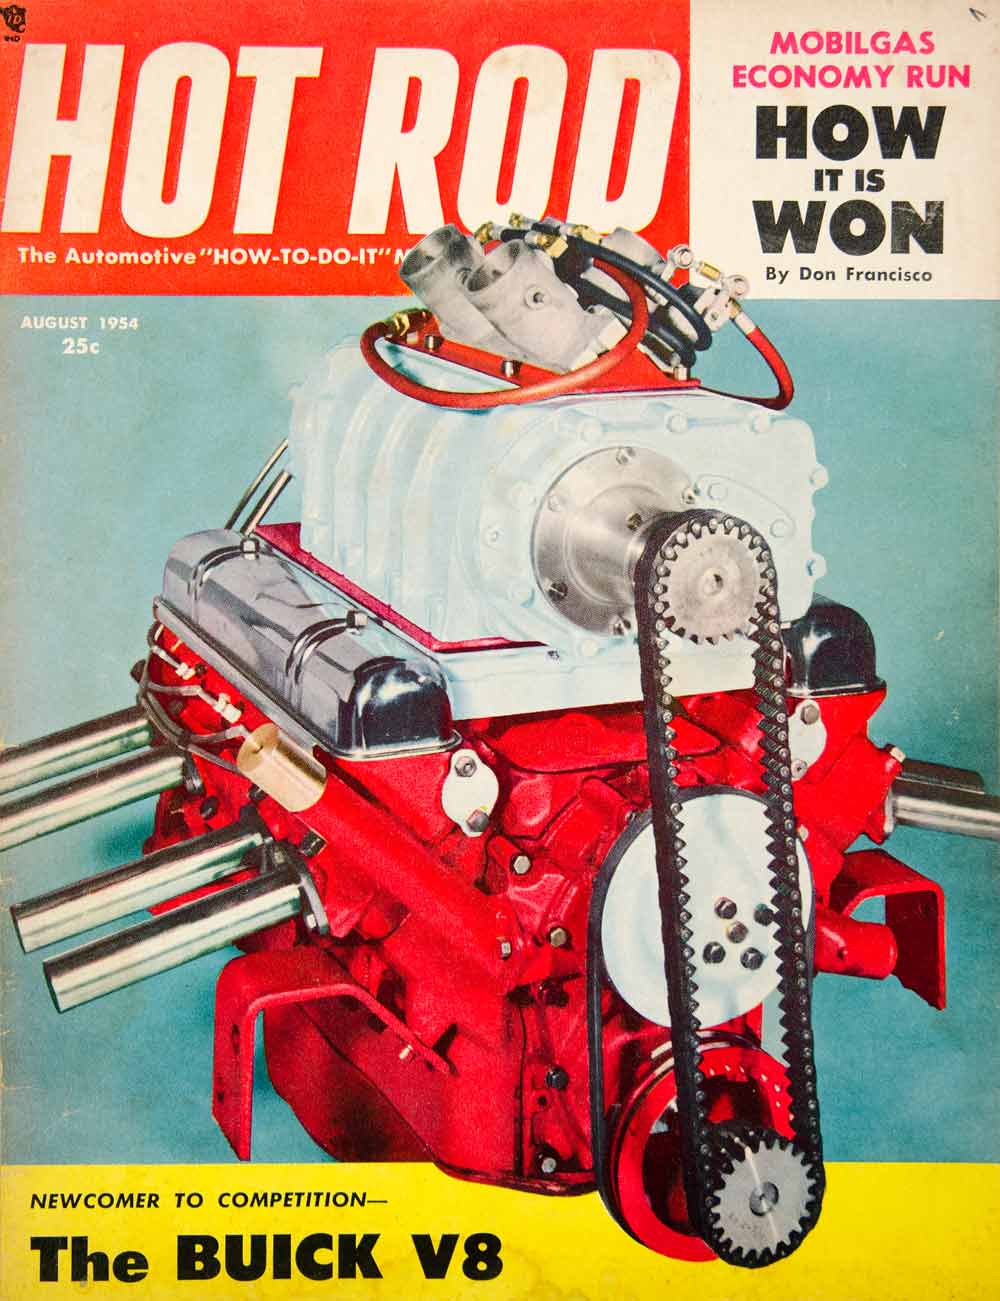 1954 Cover Hot Rod Buick V8 Engine Mobilgas Don Francisco Motor Bob D'Olivo YHR1